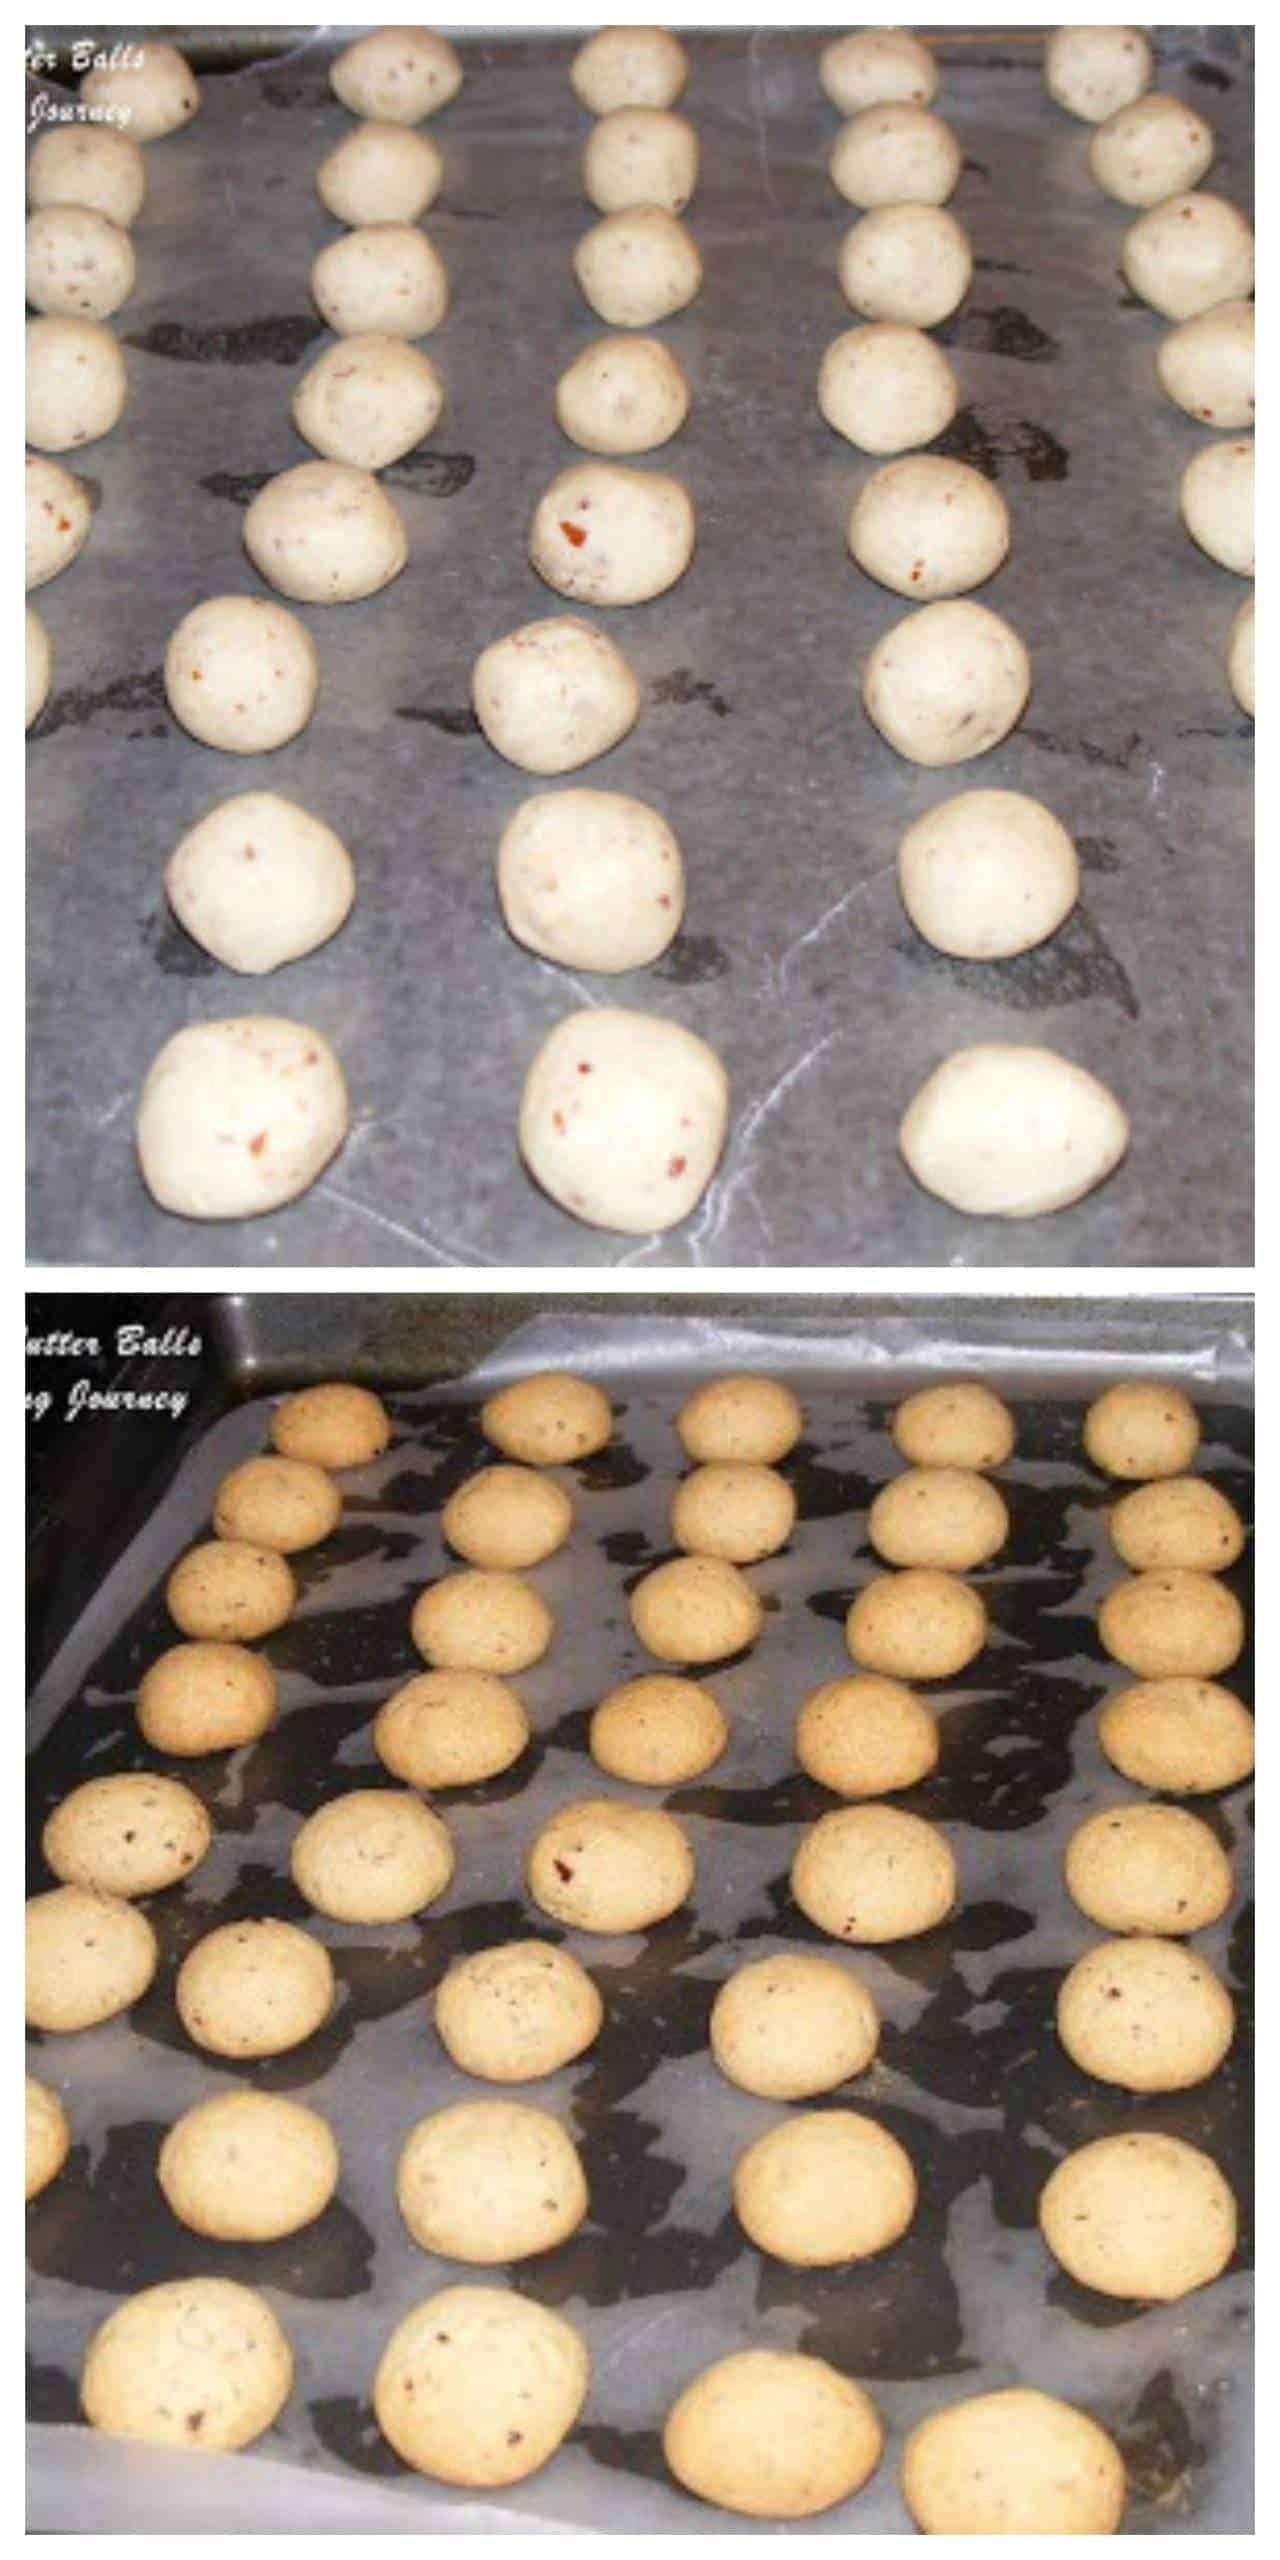 Shaped cookie dough in a baking sheet